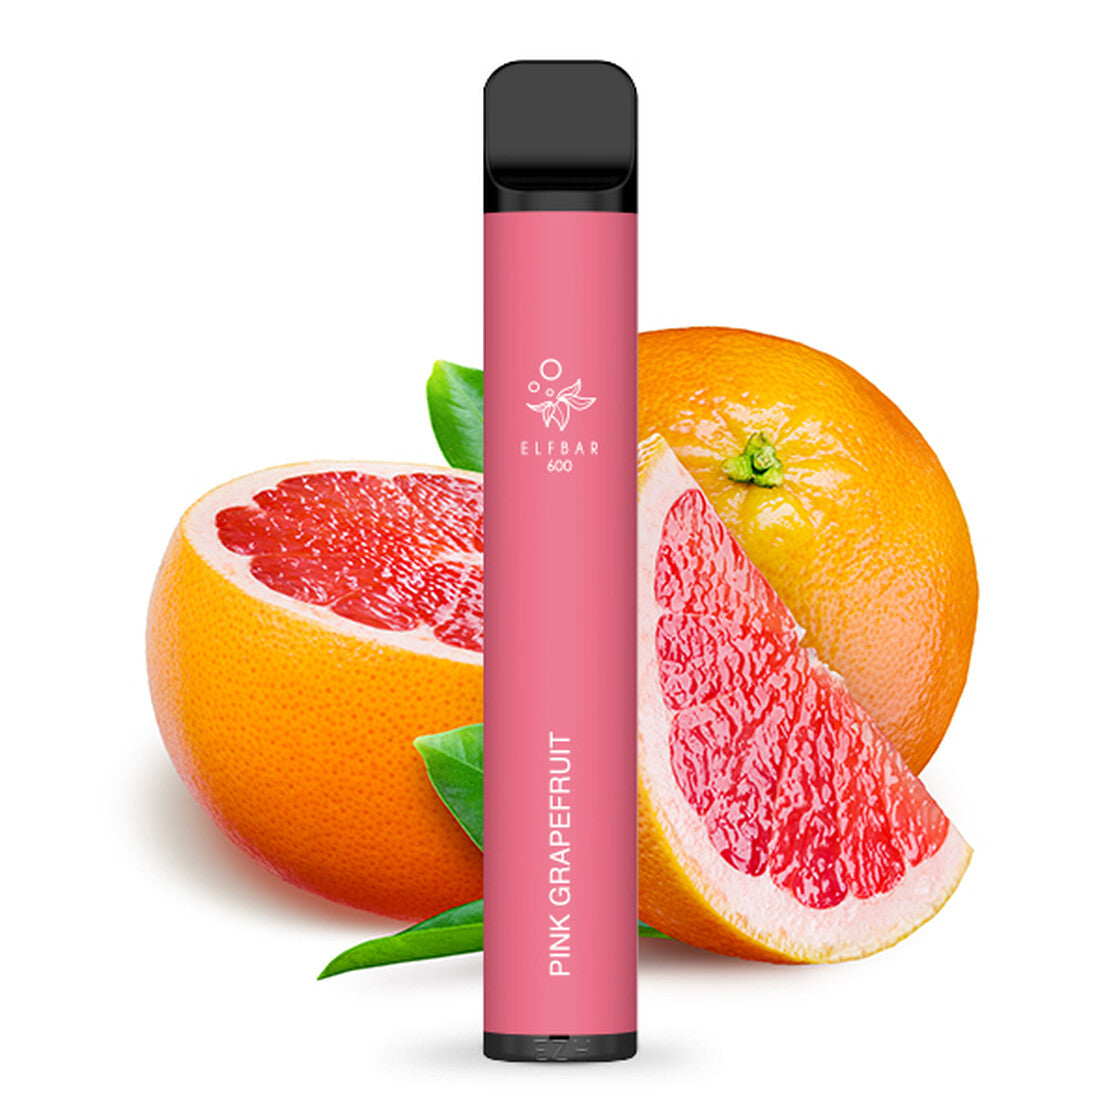 ELFBAR 600 - Pink Grapefruit